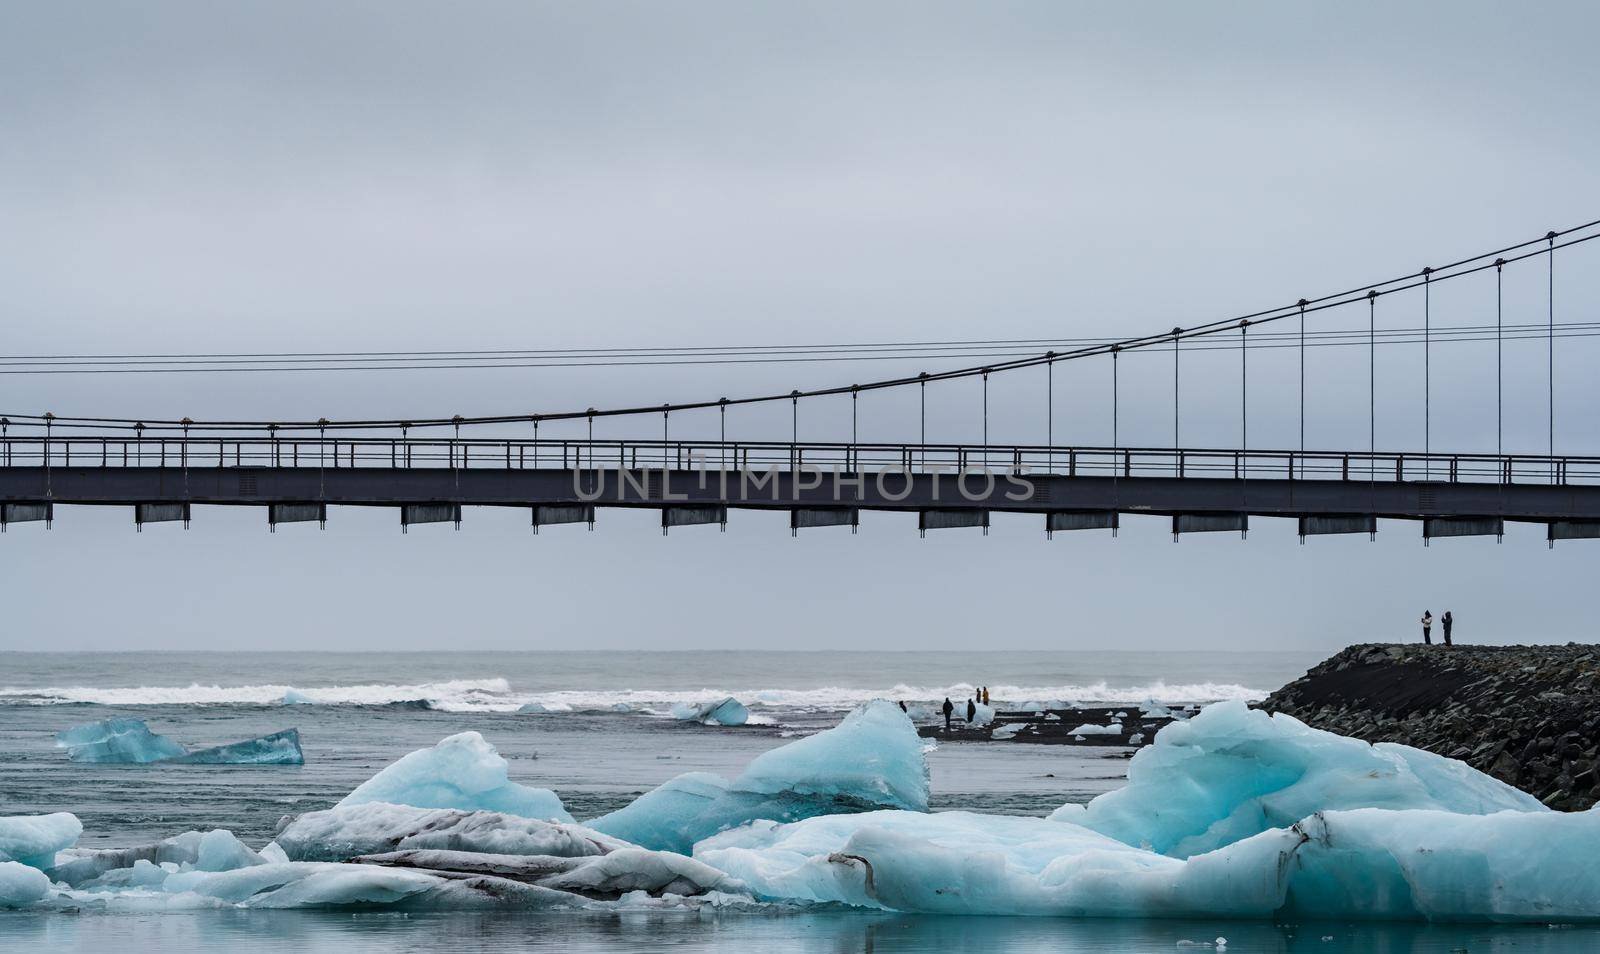 Jokulsarlon bridge, mouth and icebergs on diamond beach by FerradalFCG